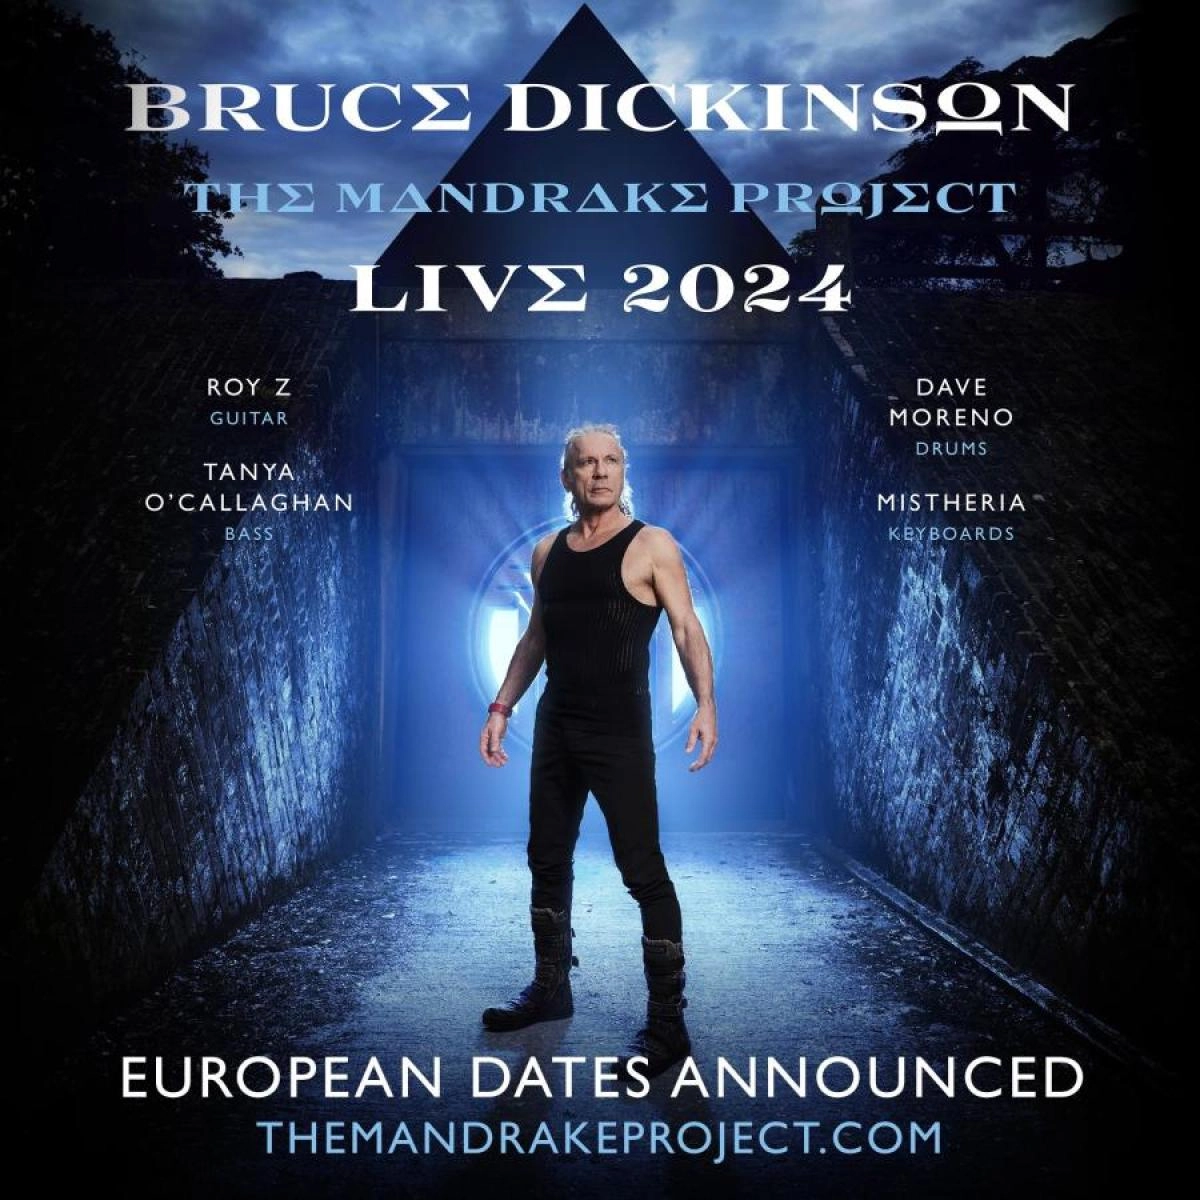 Bruce Dickinson - The Mandrake Project Live 2024 al Maimarkt Mannheim Tickets